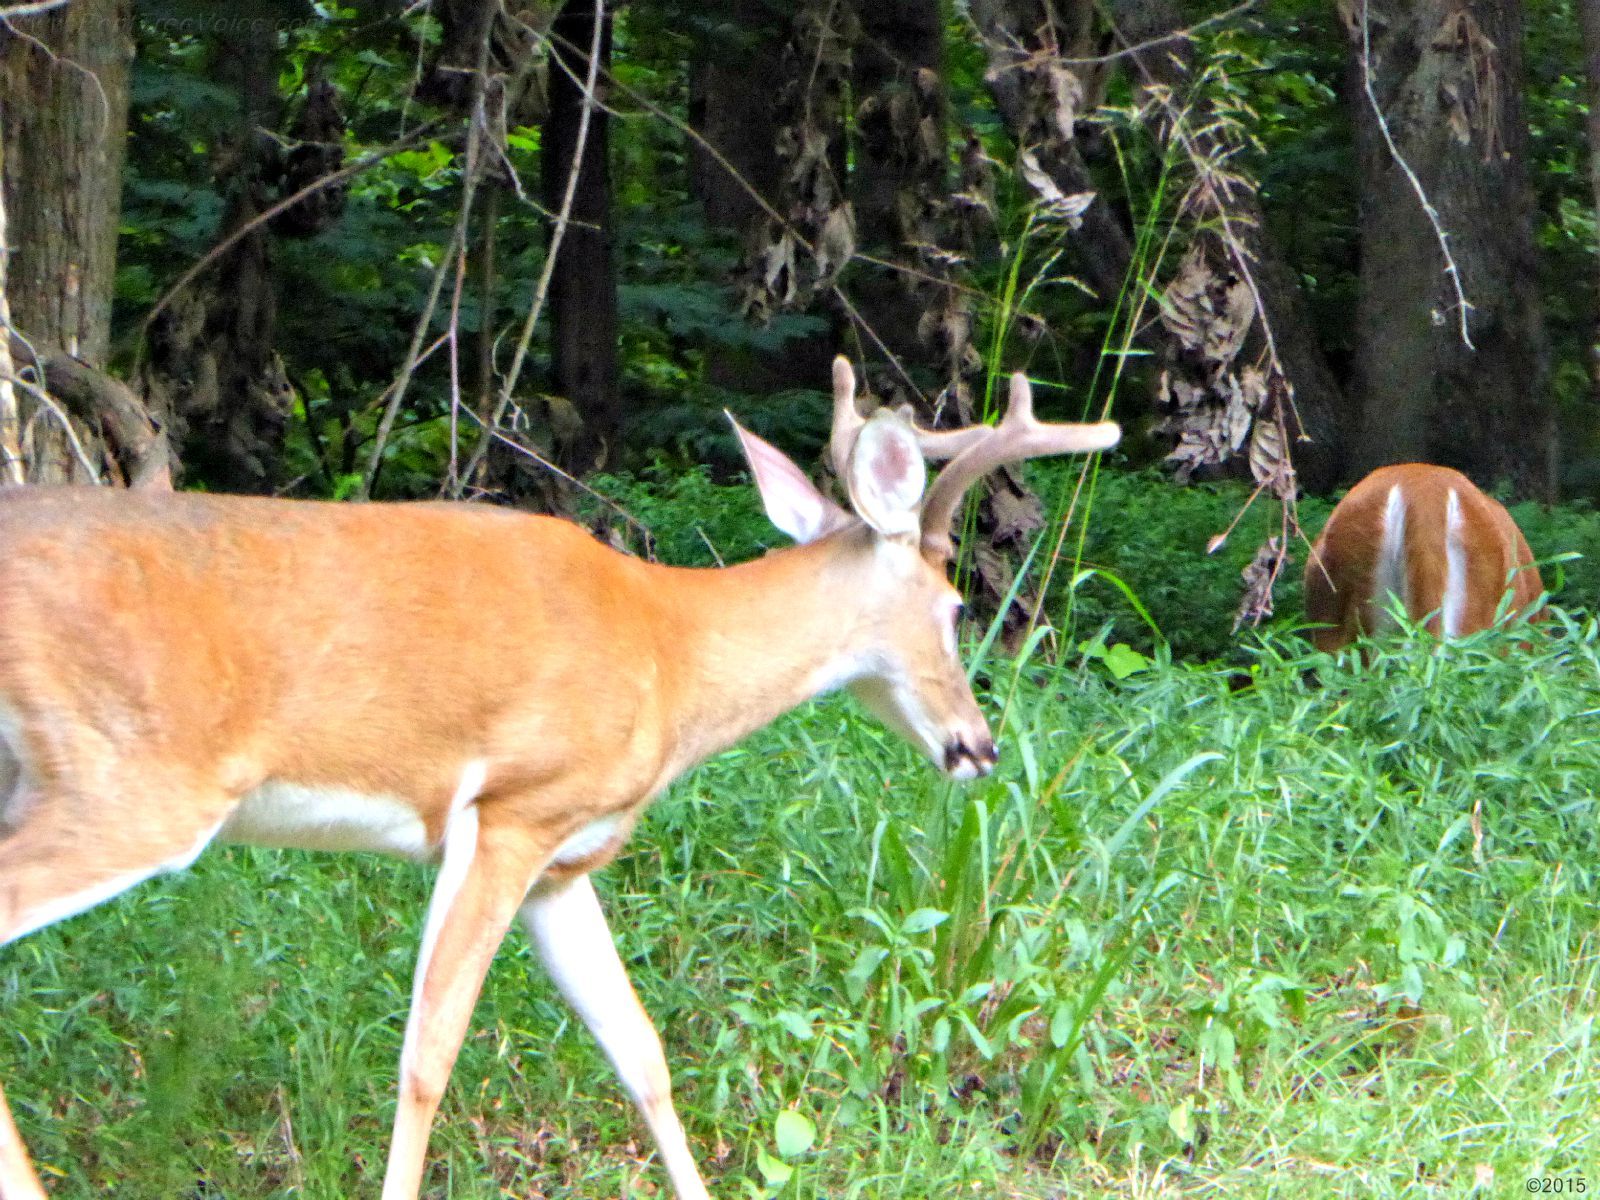 August 10, 2015 - Buck and doe in Bent Tree